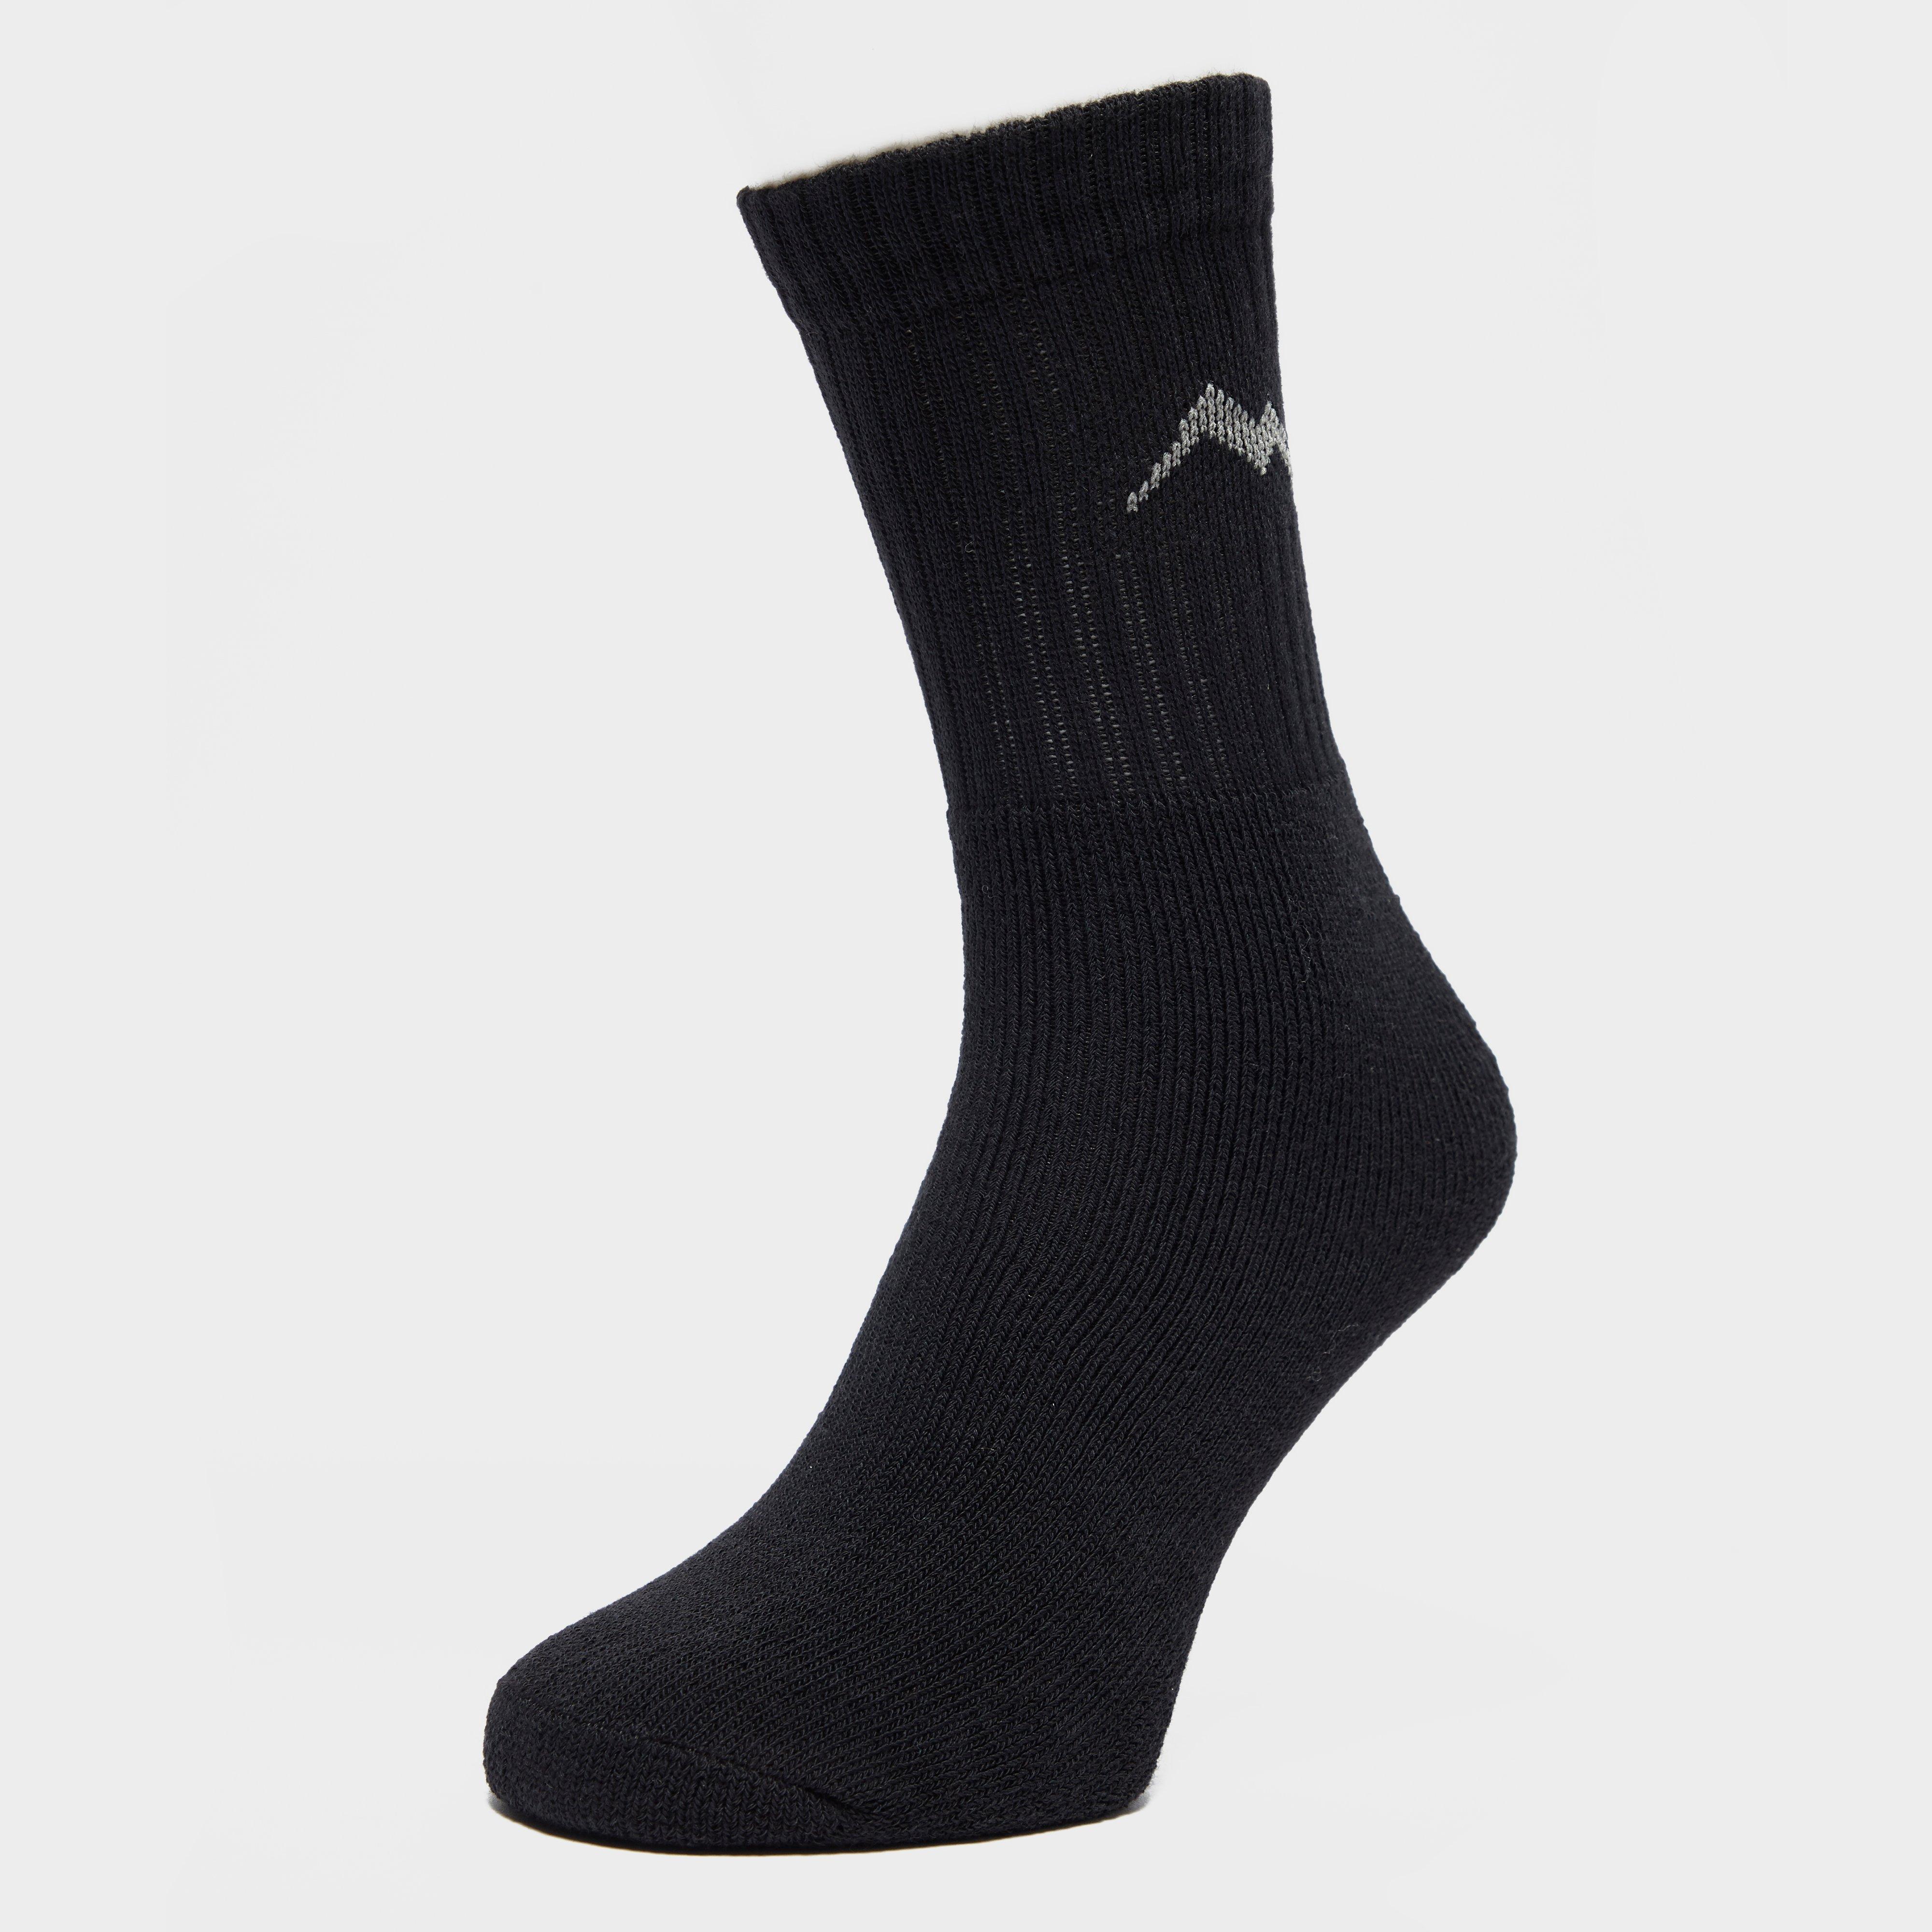 Peter Storm Men's Multi Activity Sports Sock - 3 Pack - Black, Black